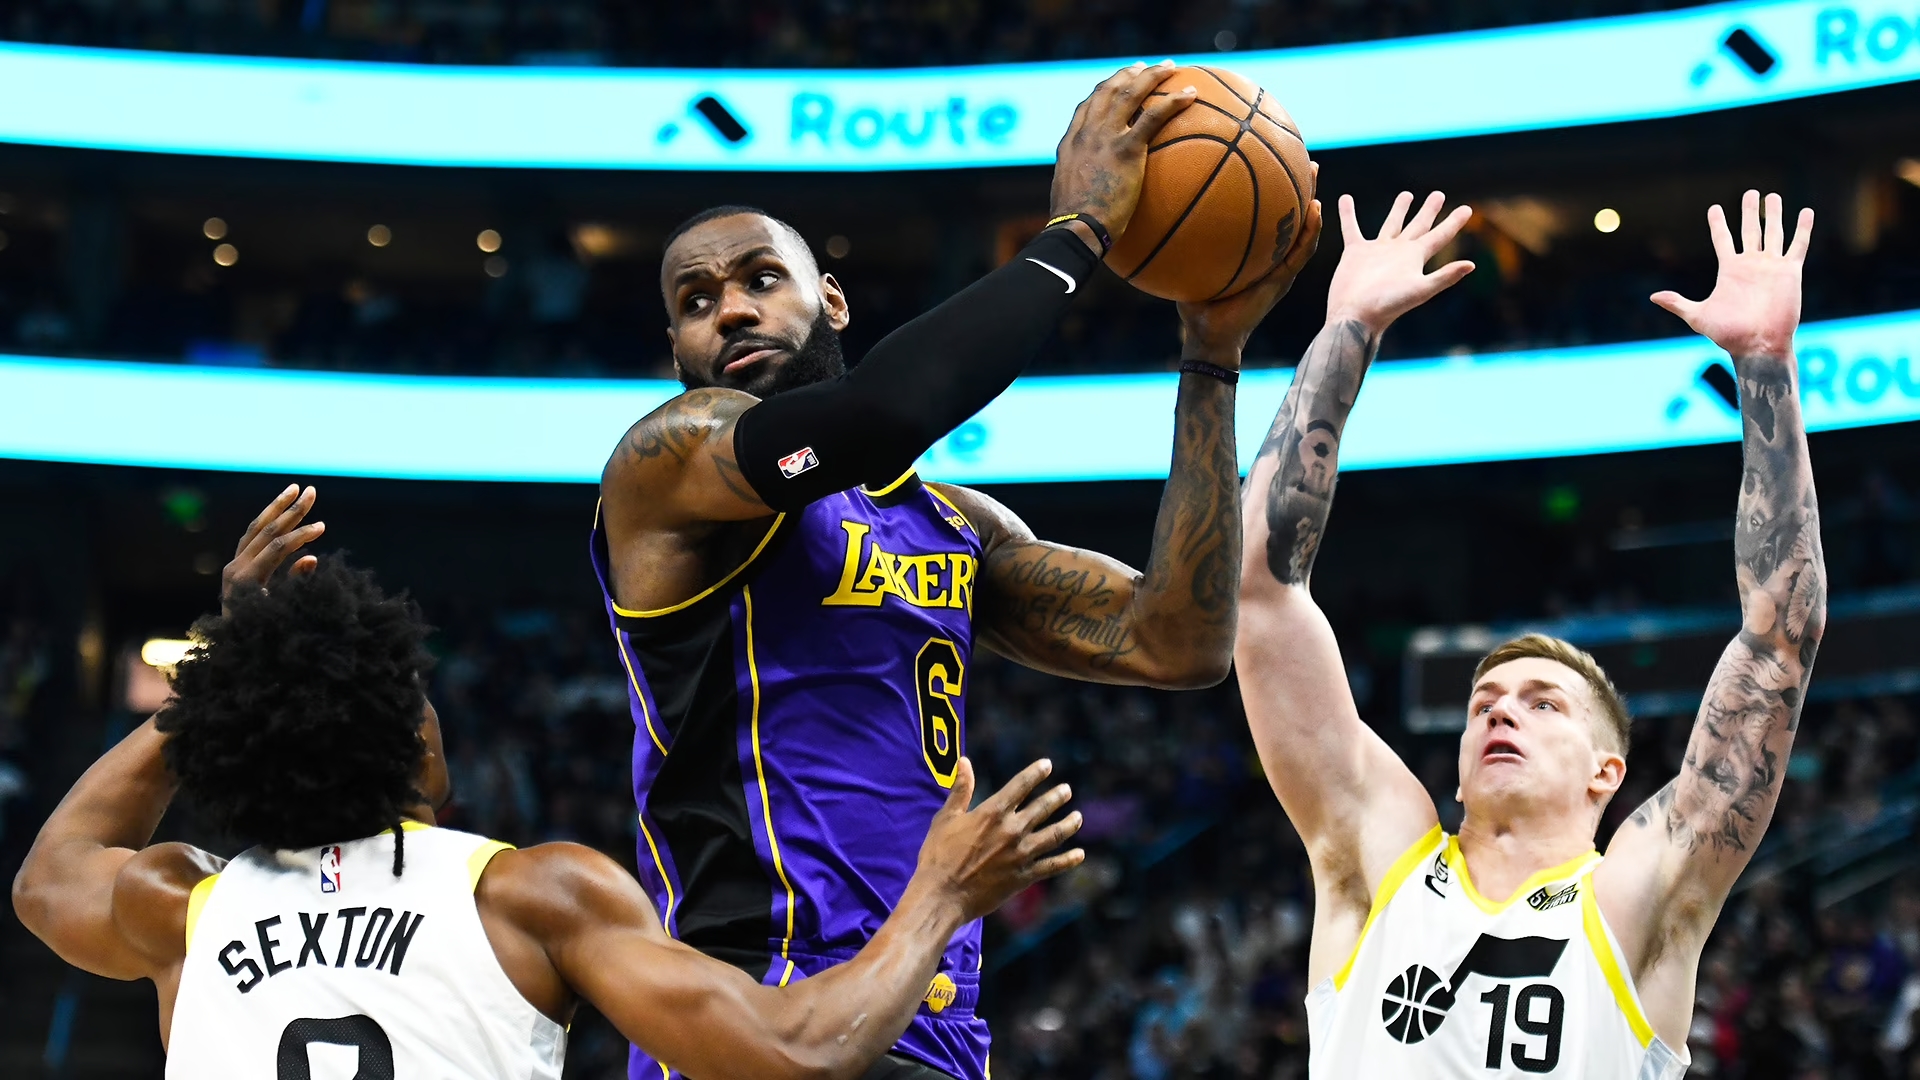 Rekap Hasil NBA Hari ini : Lakers Kalahkan Jazz Lewat Overtime, Joel Embiid Pimpin Kemenangan Sixers dari Celtics